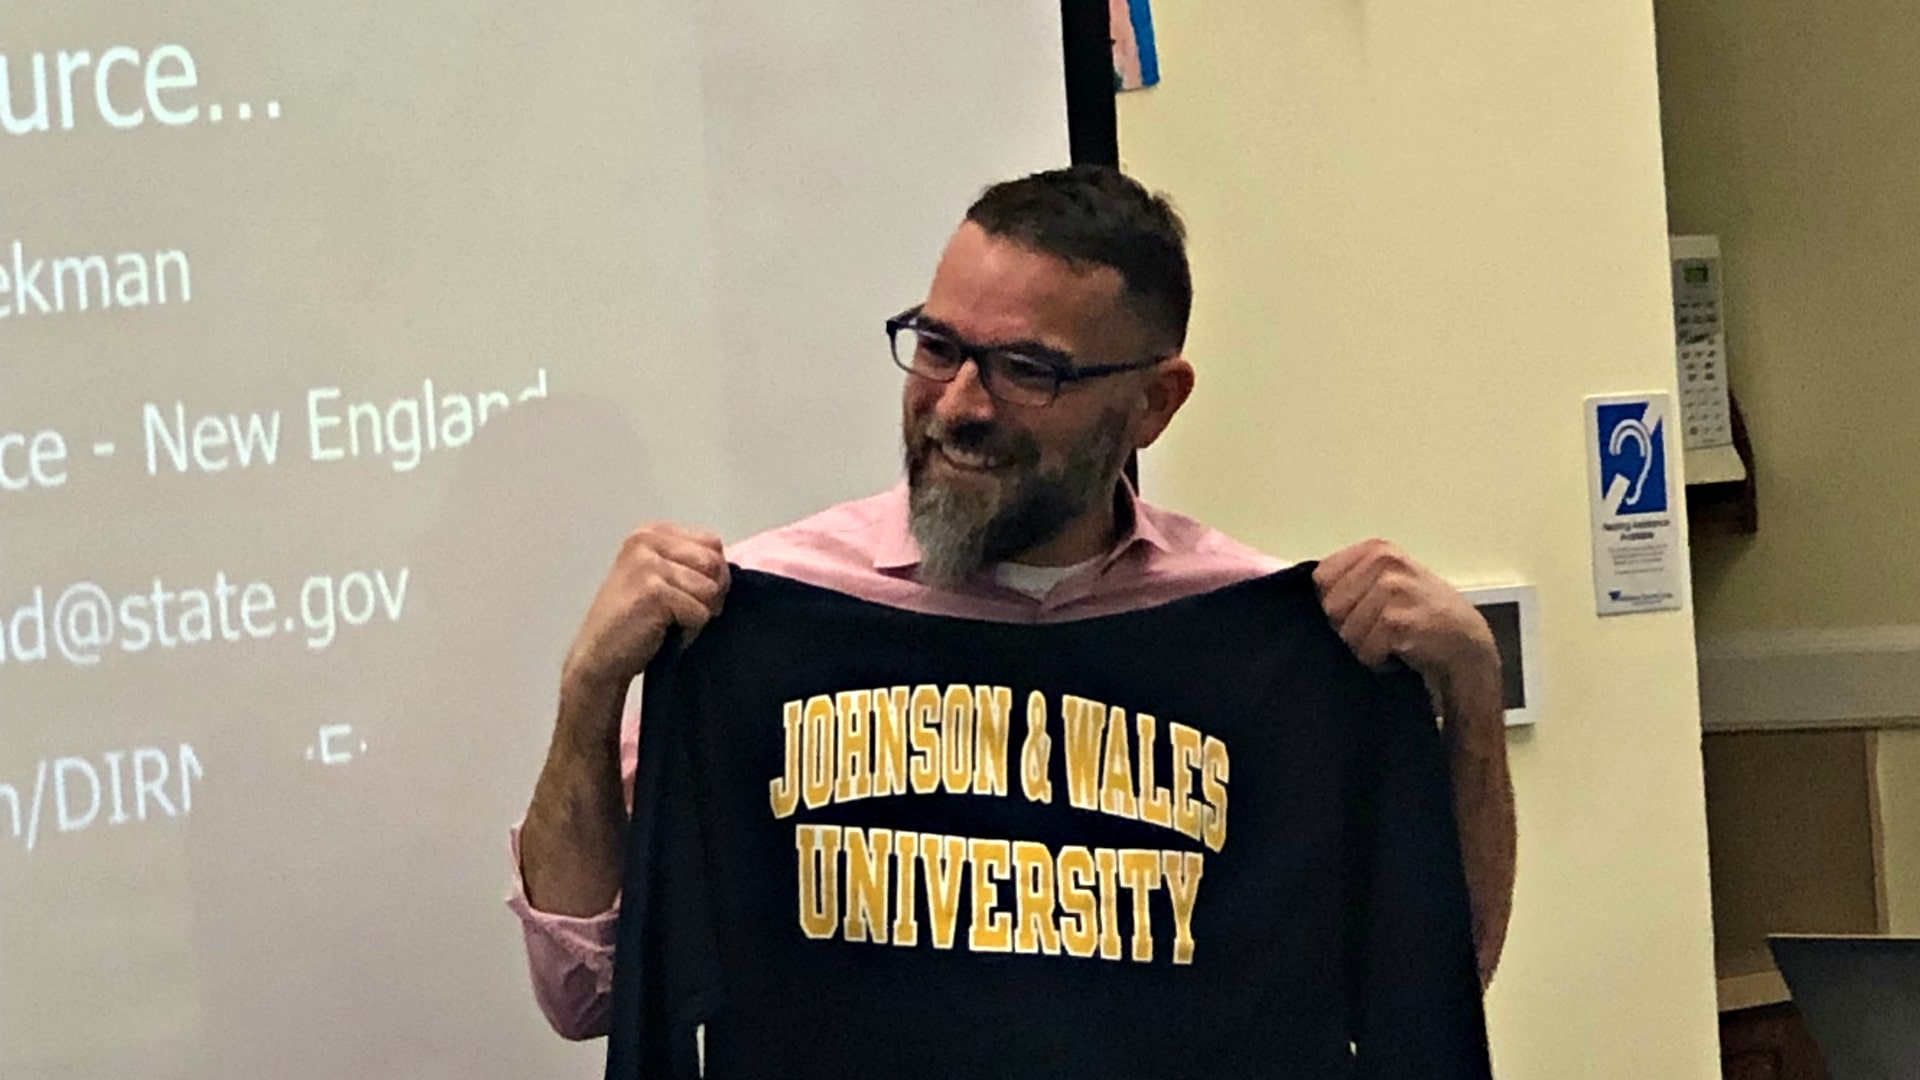 Students gave Philip Beekman a JWU sweater.